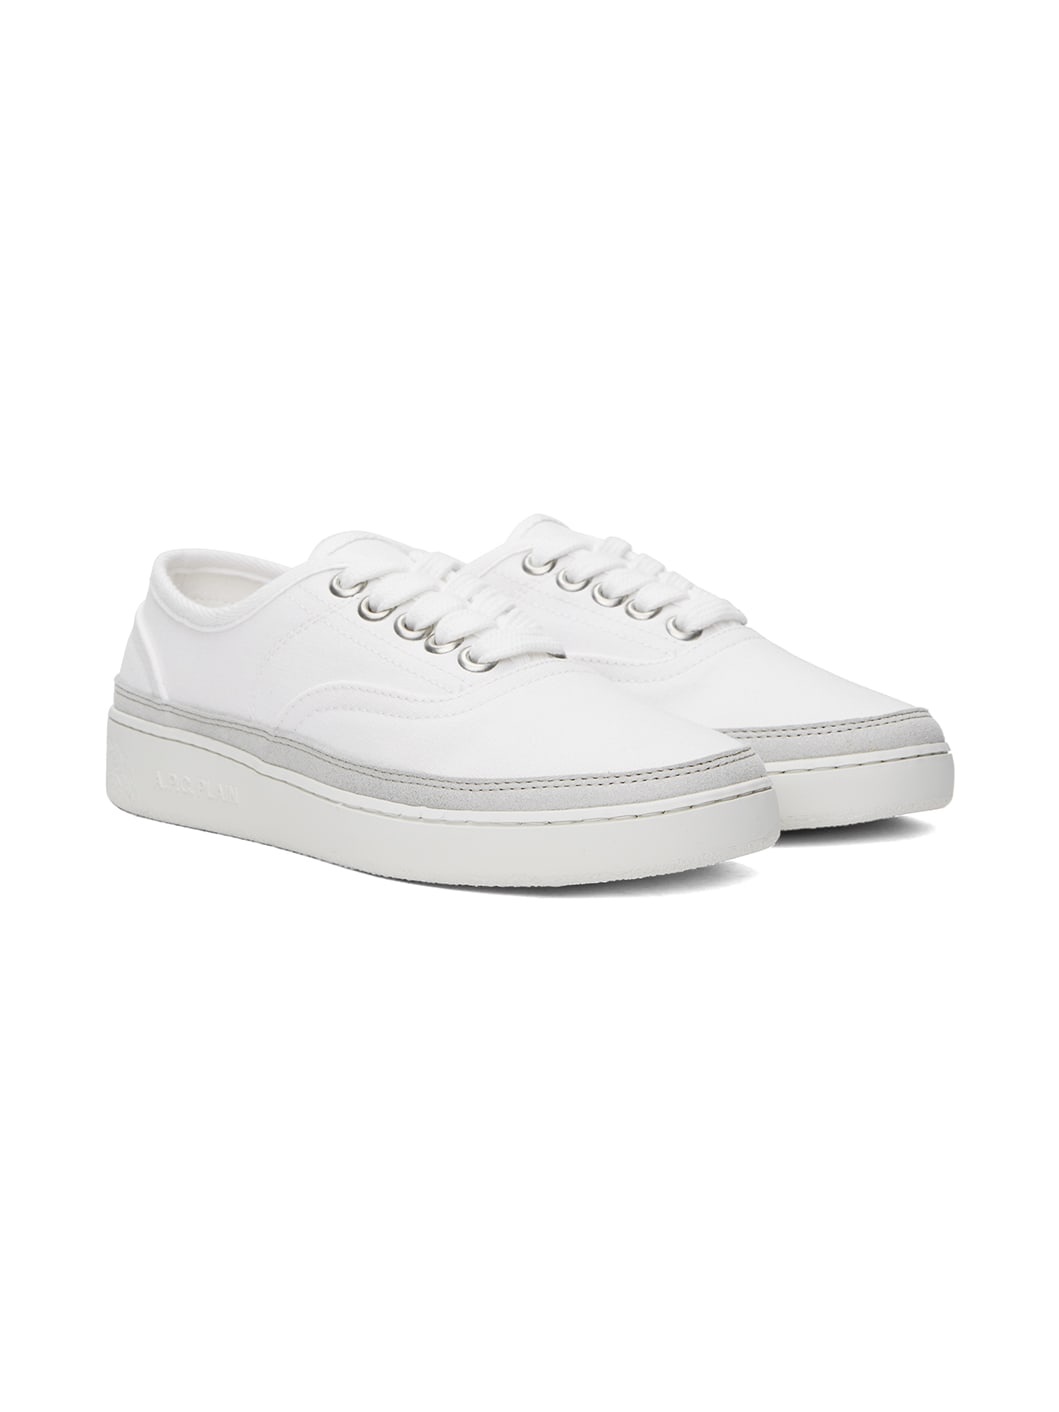 White Plain Simple Sneakers - 4